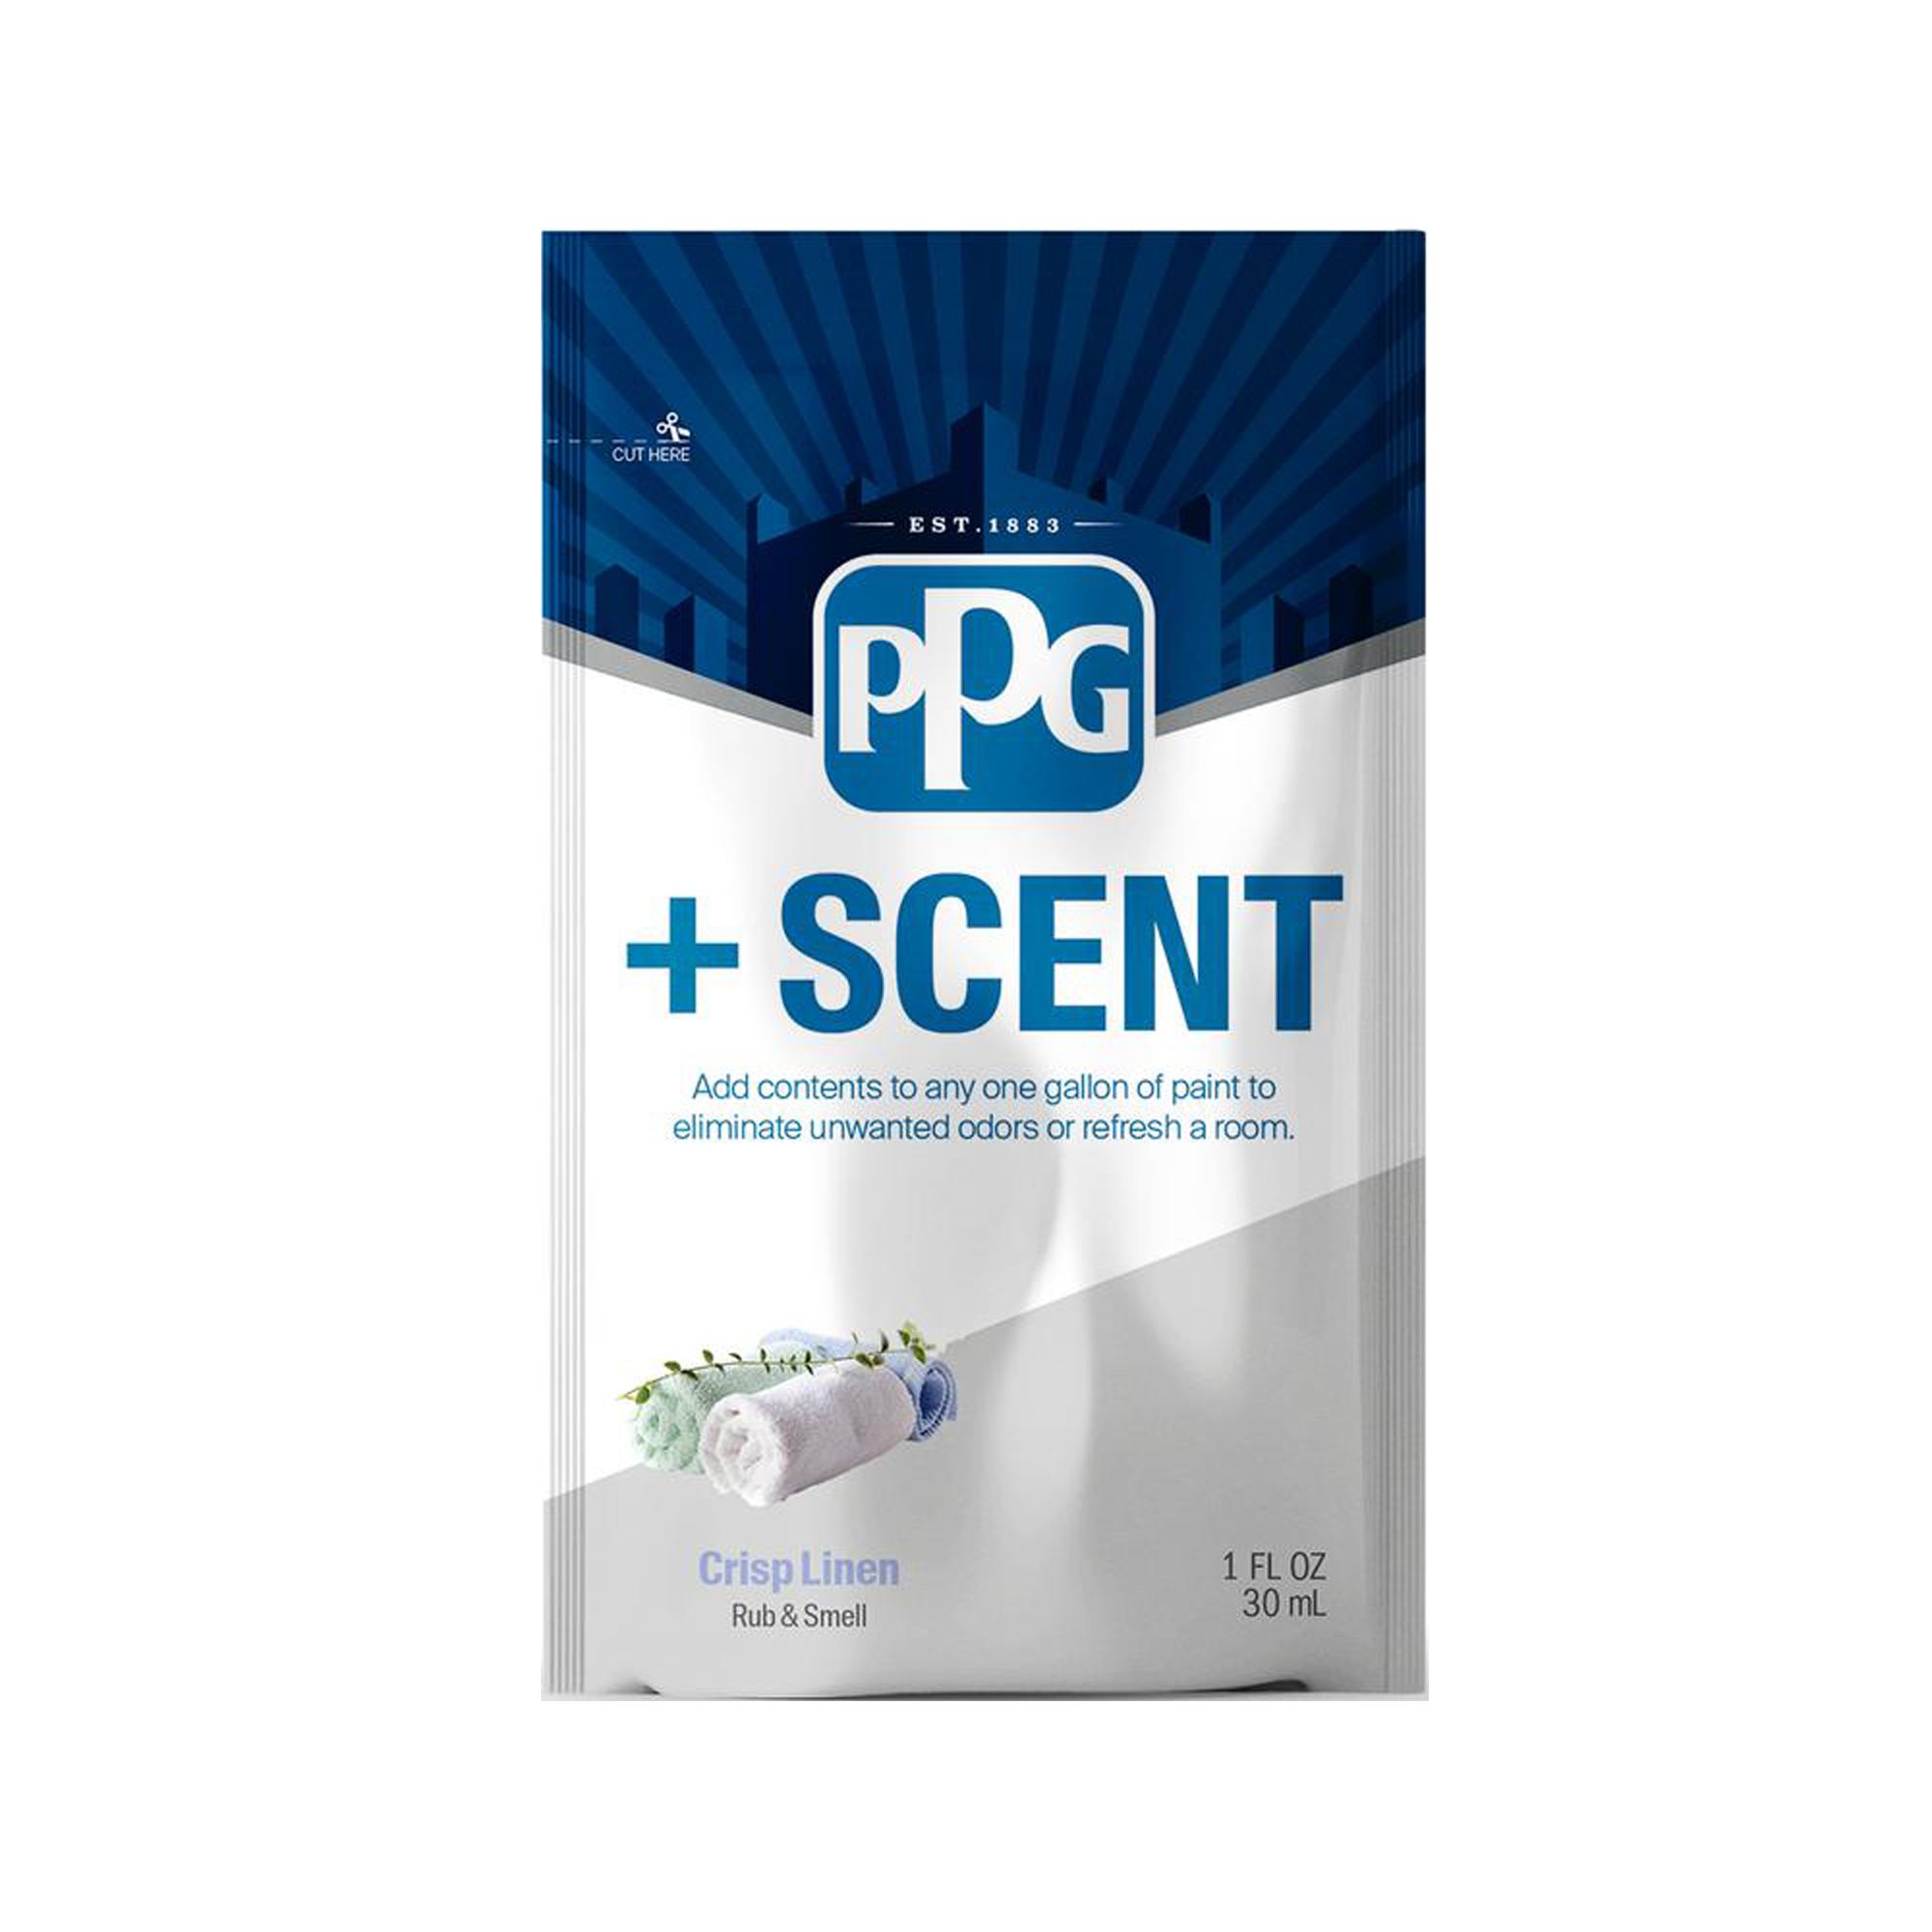 PPG +Scent Linen